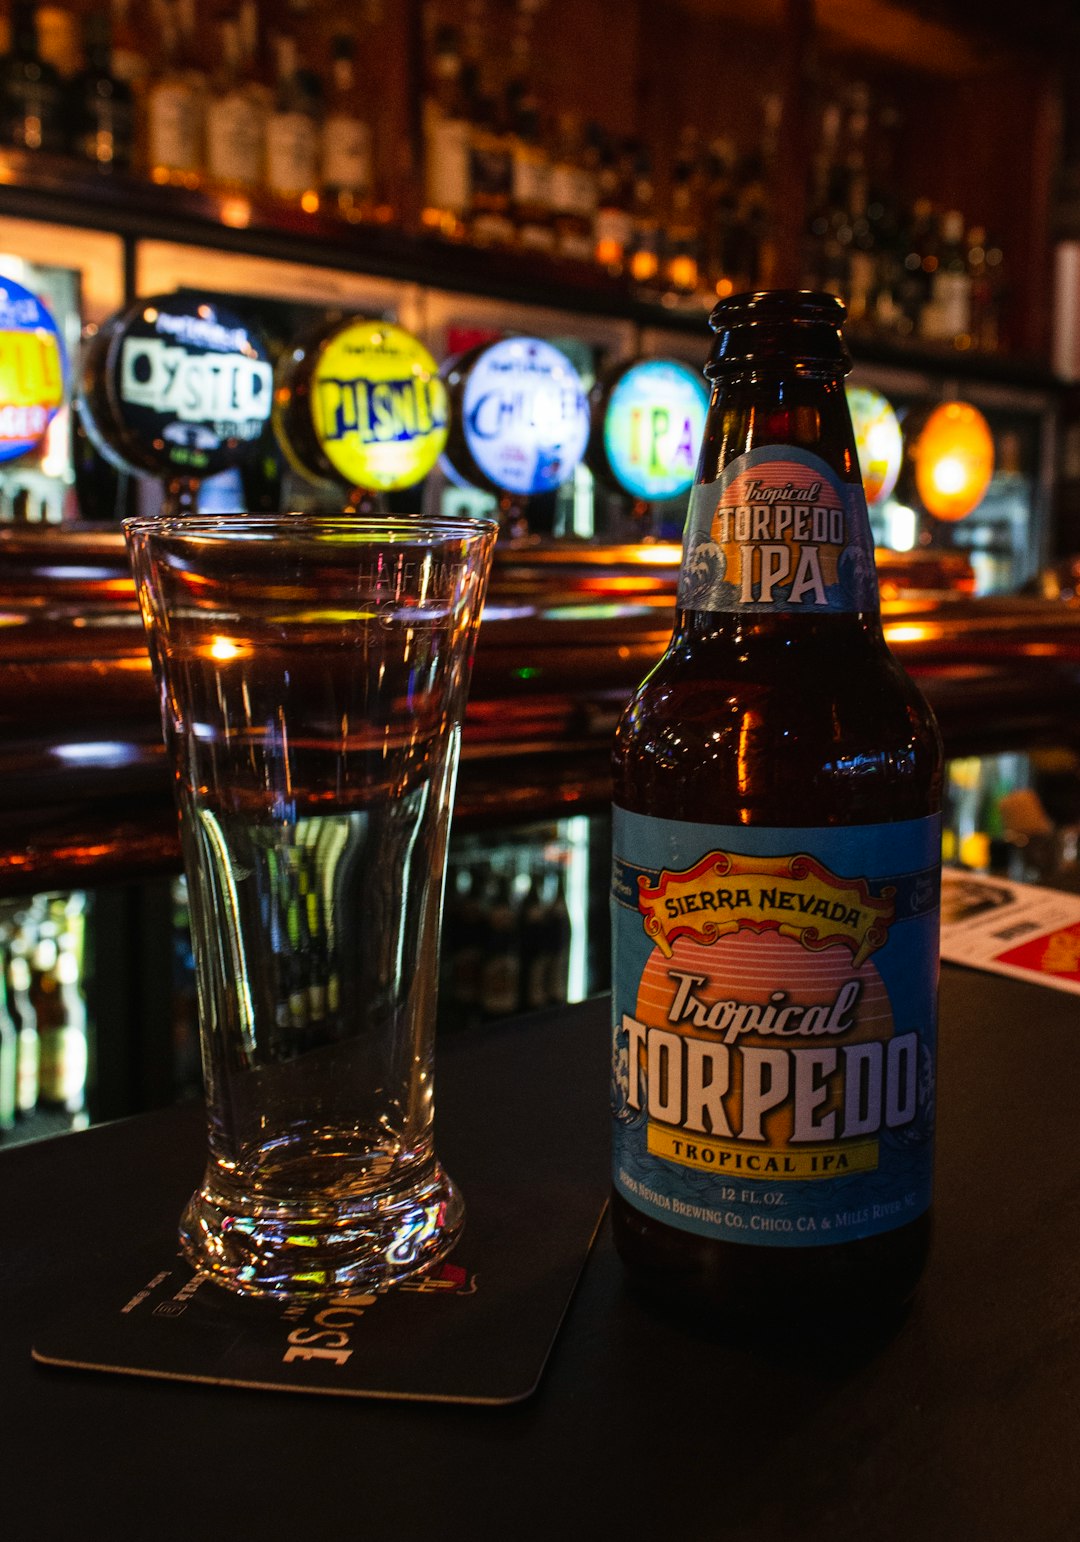 Tropical Torpedo liquor bottle beside clear drinking glass